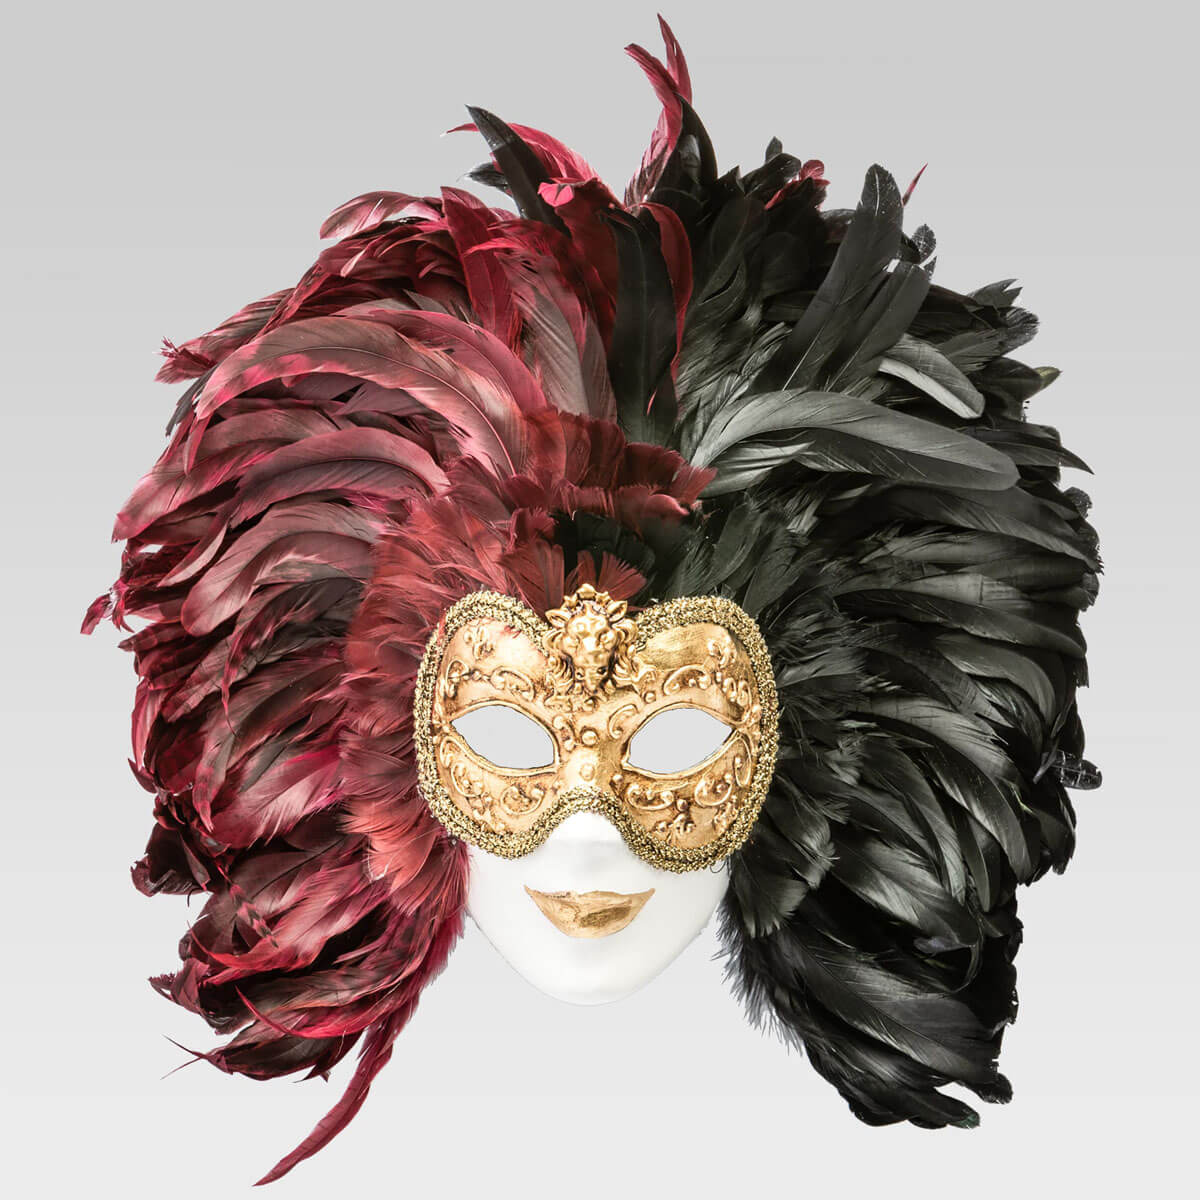 Venezia Maschere, Handmade Venetian Masks Certified Shop